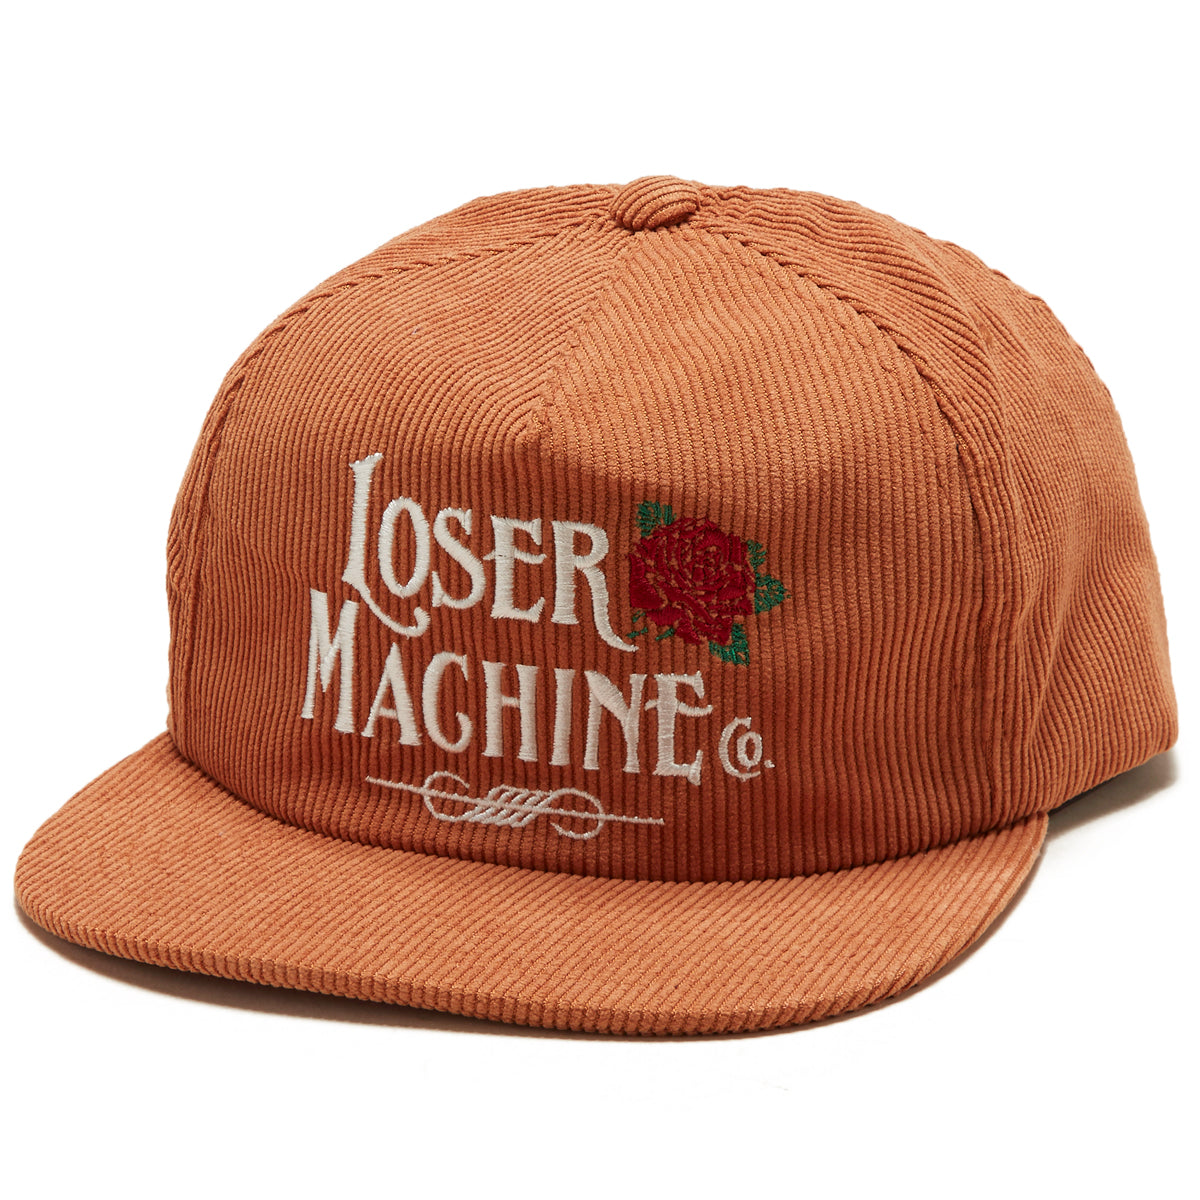 Loser Machine Endless Hat - Rust image 1